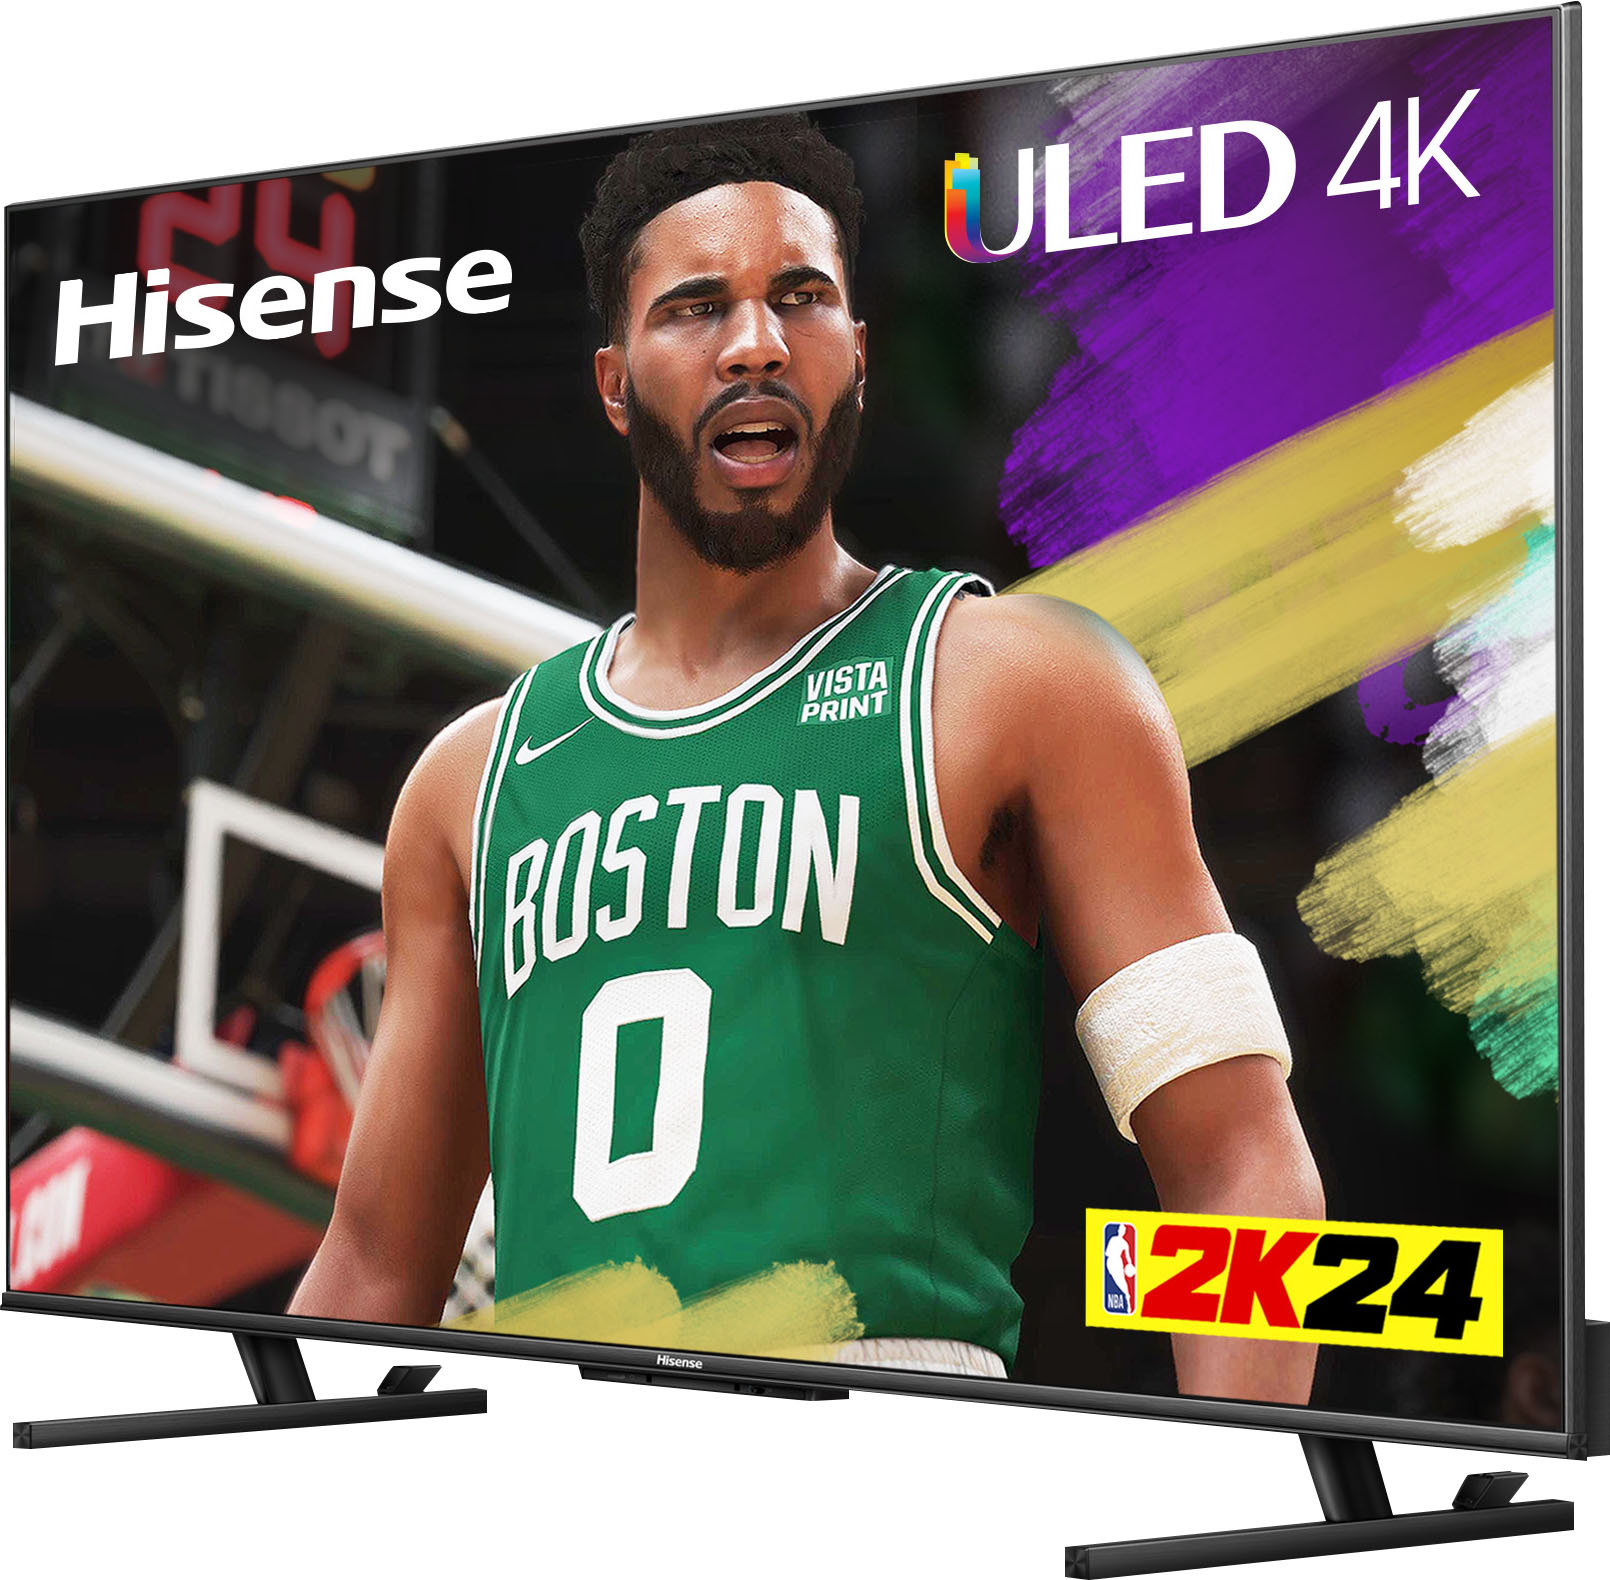 Hisense U8K 65 4K Ultra HD MiniLED Smart TV - 65U8KQTUK